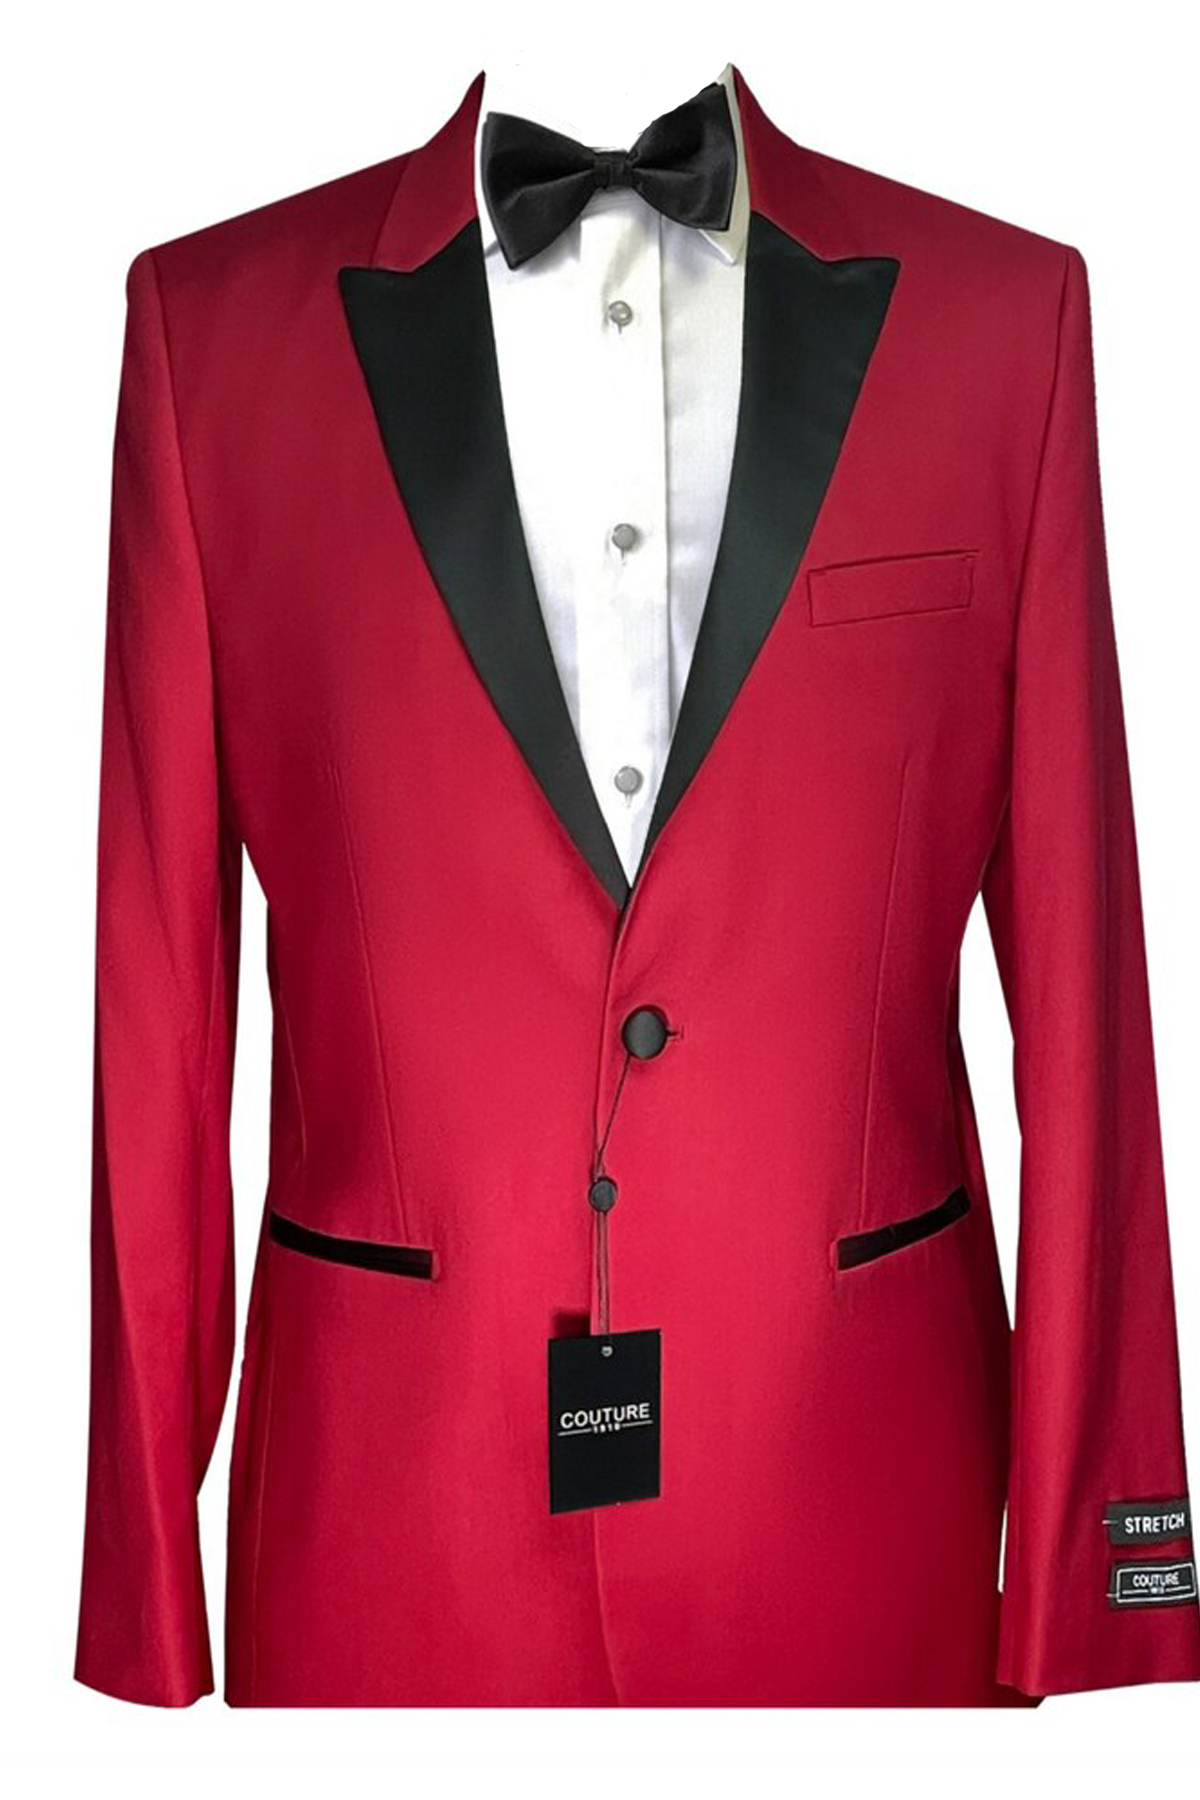 Stretch Blend Red One Button Peak Tuxedo Jacket w Black Lapel